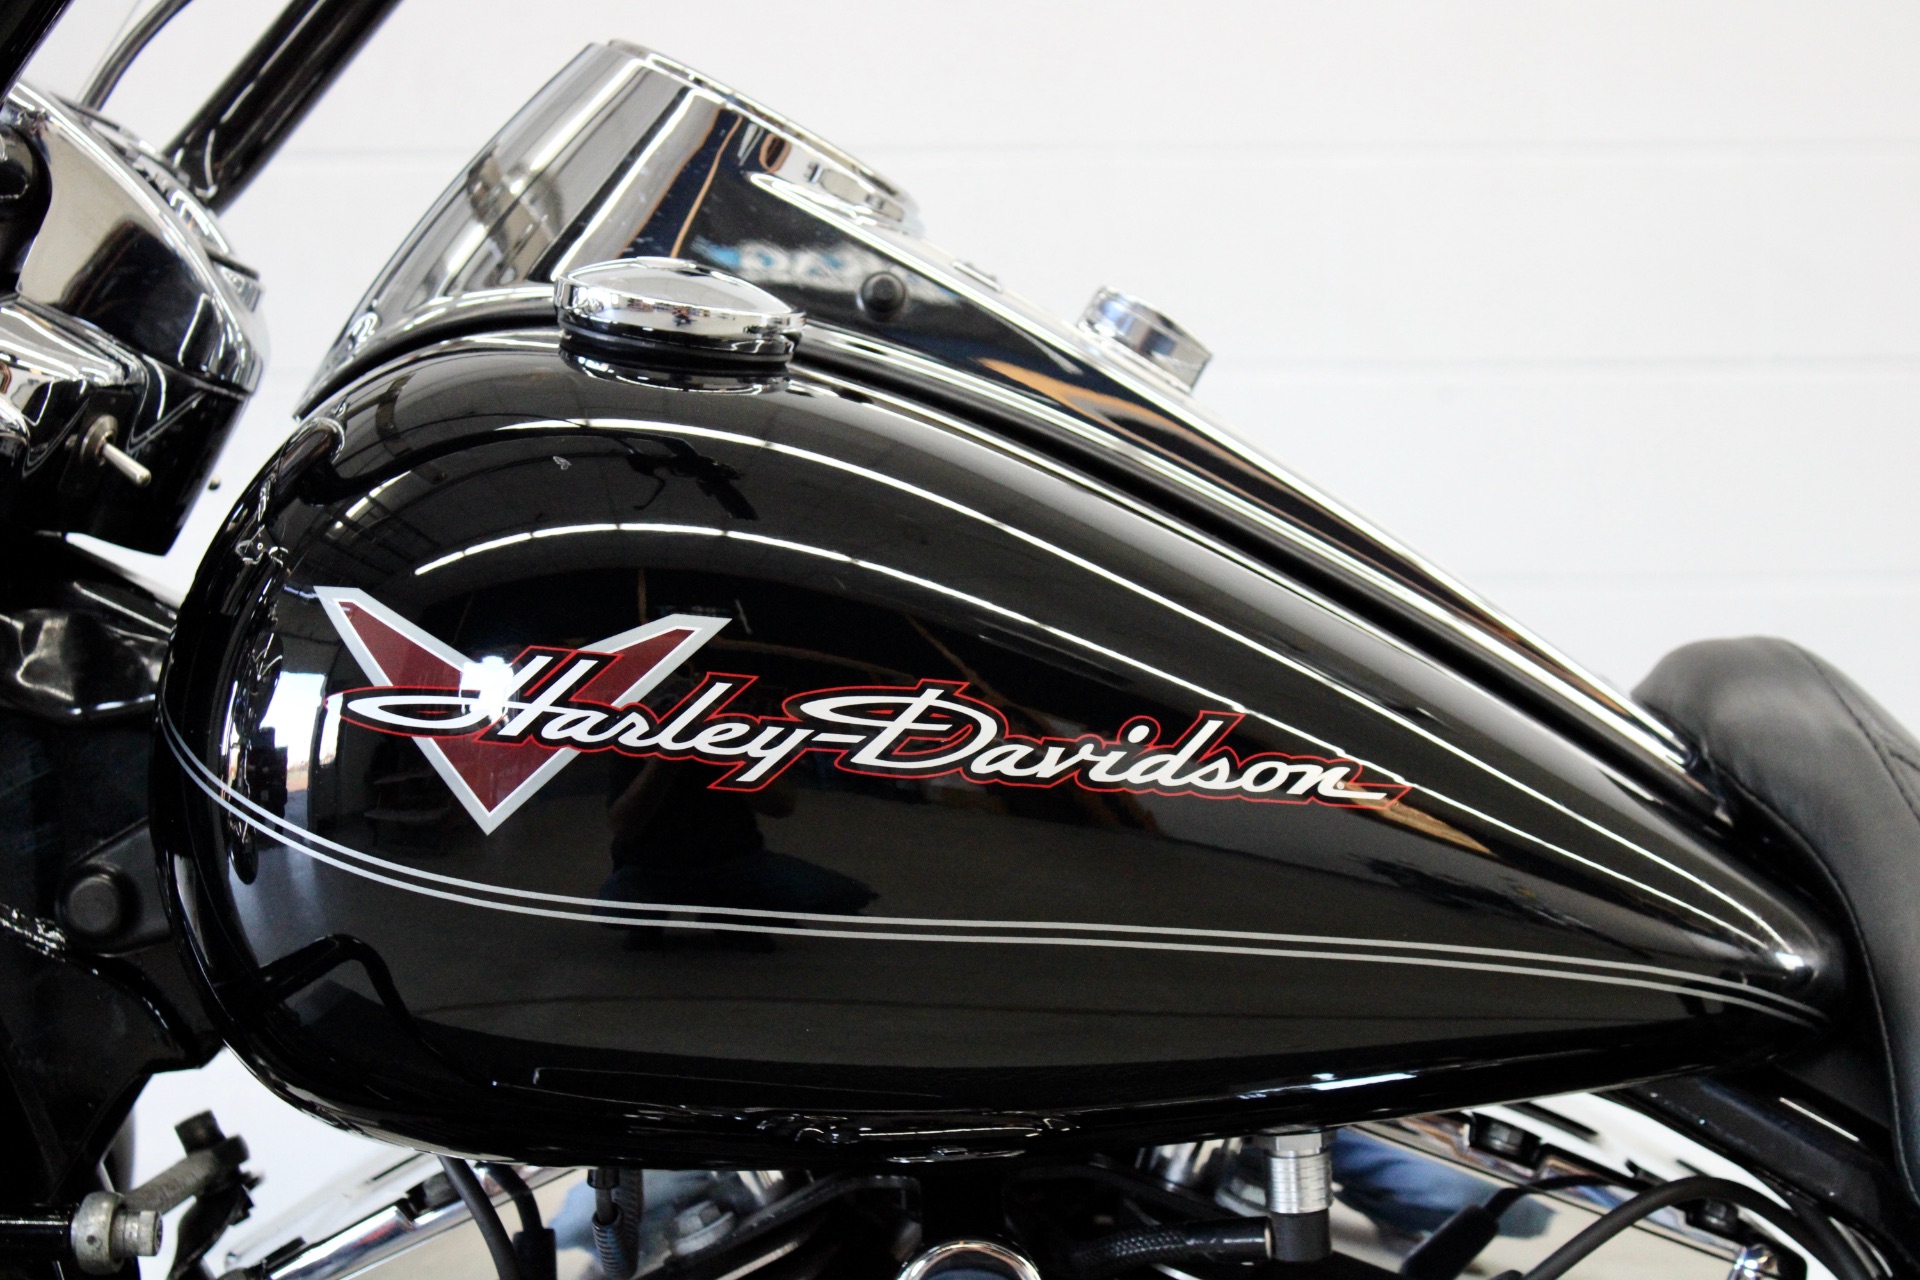 2011 Harley-Davidson Road King® in Fredericksburg, Virginia - Photo 18